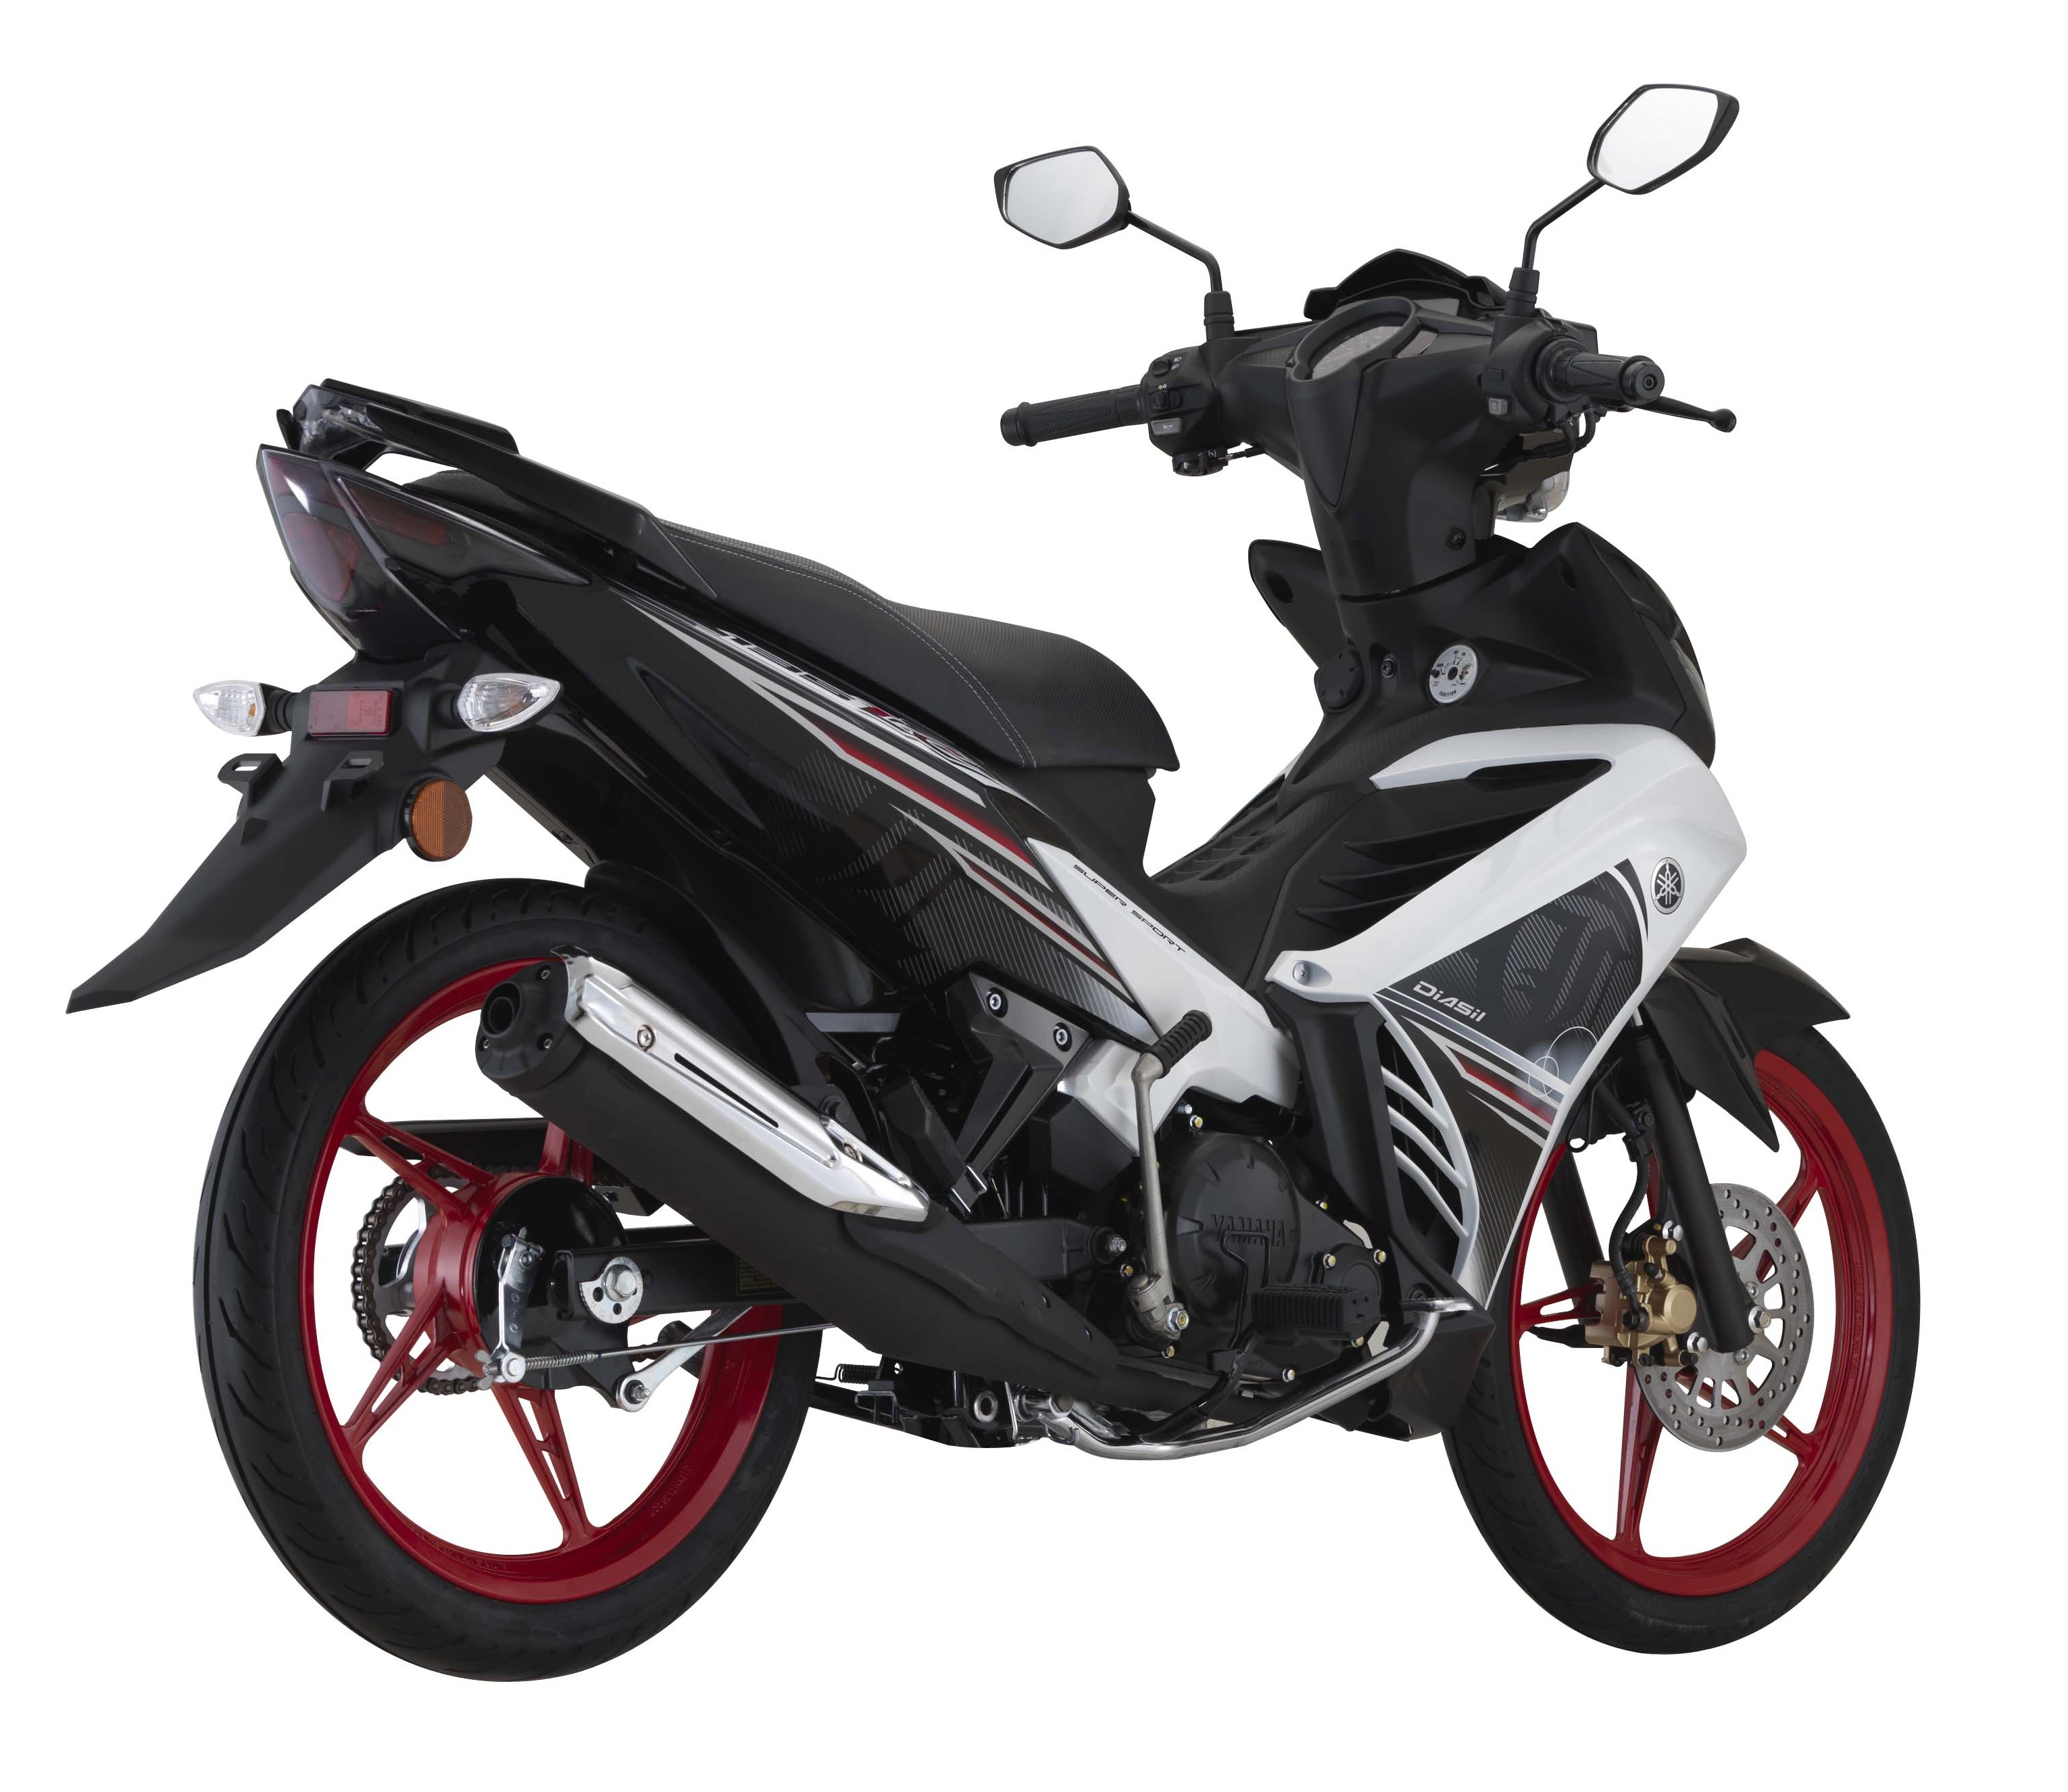 2016 Yamaha 135LC price confirmed, up to RM7,068 Paul Tan - Image 439189